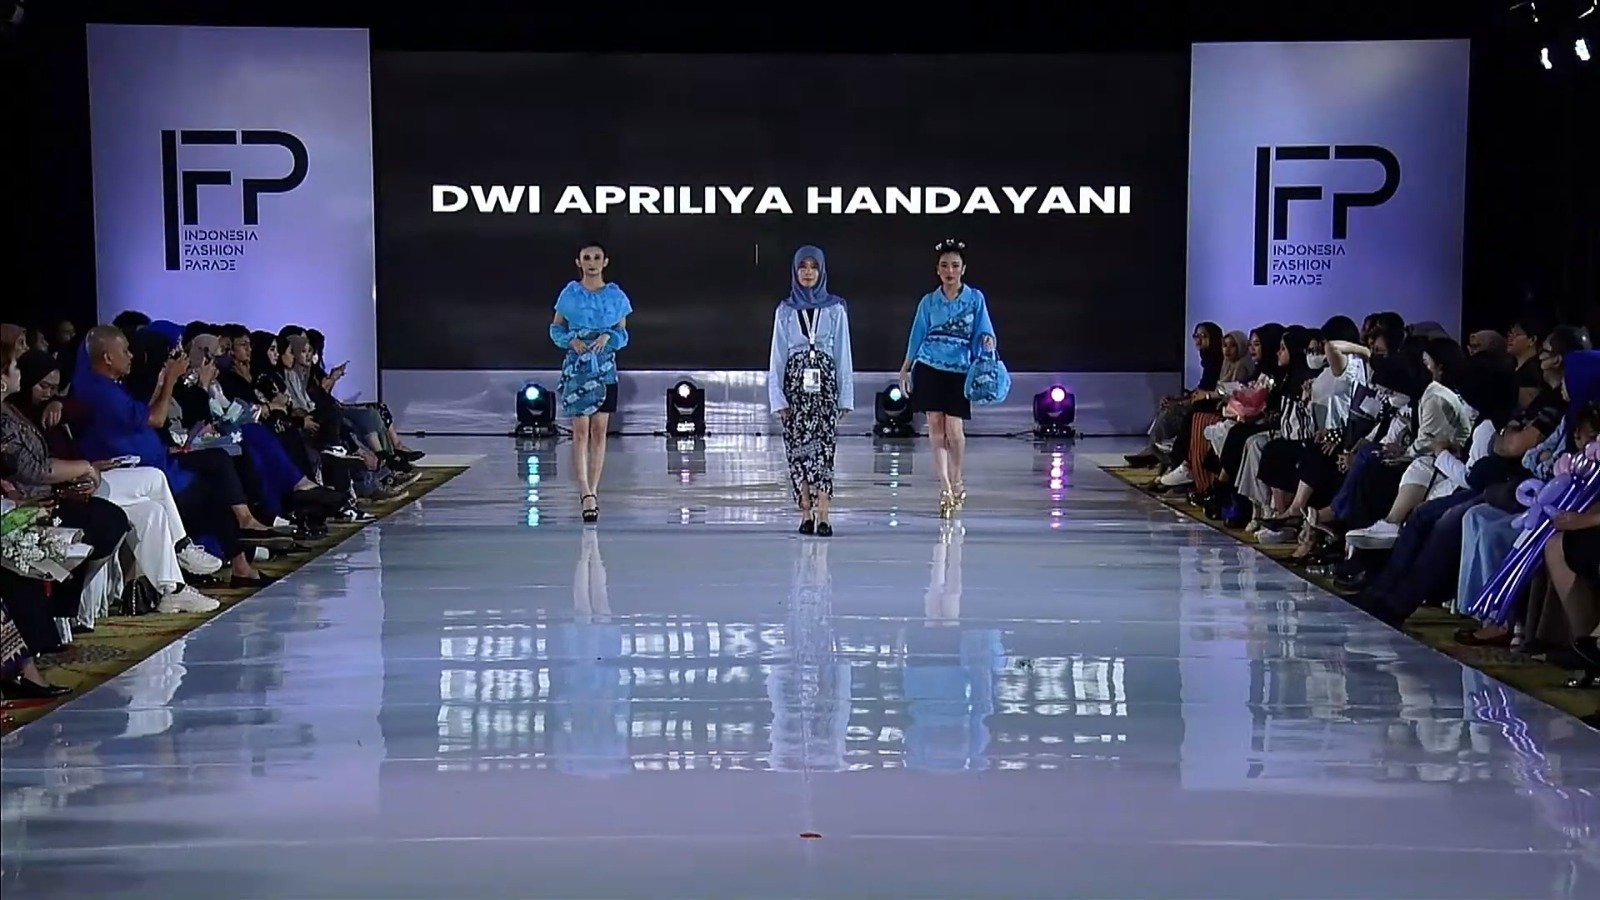 Dwi Apriliya Handayani, Indonesia Fashion Parade 2023